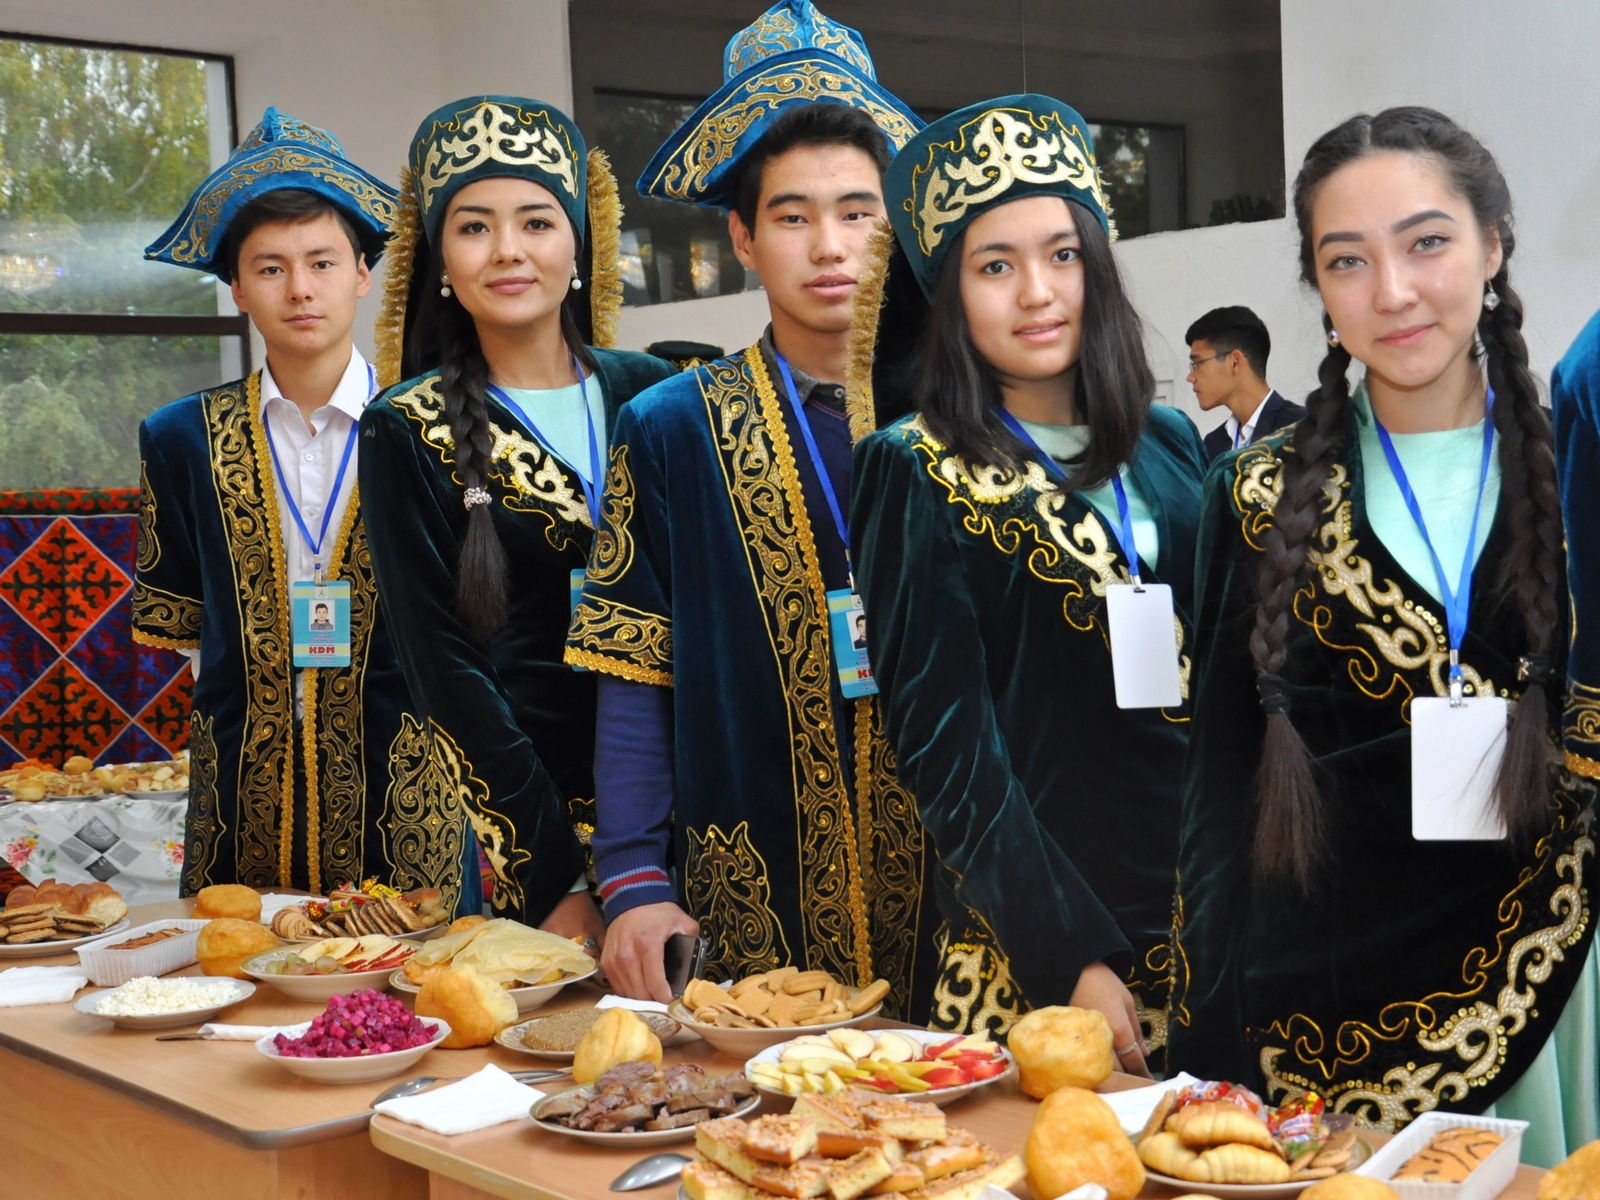 Ұлттық киімдер күні. Казахи народ. Нации живущие в Казахстане. Национальная одежда казахов. Люди живущие в Казахстане.